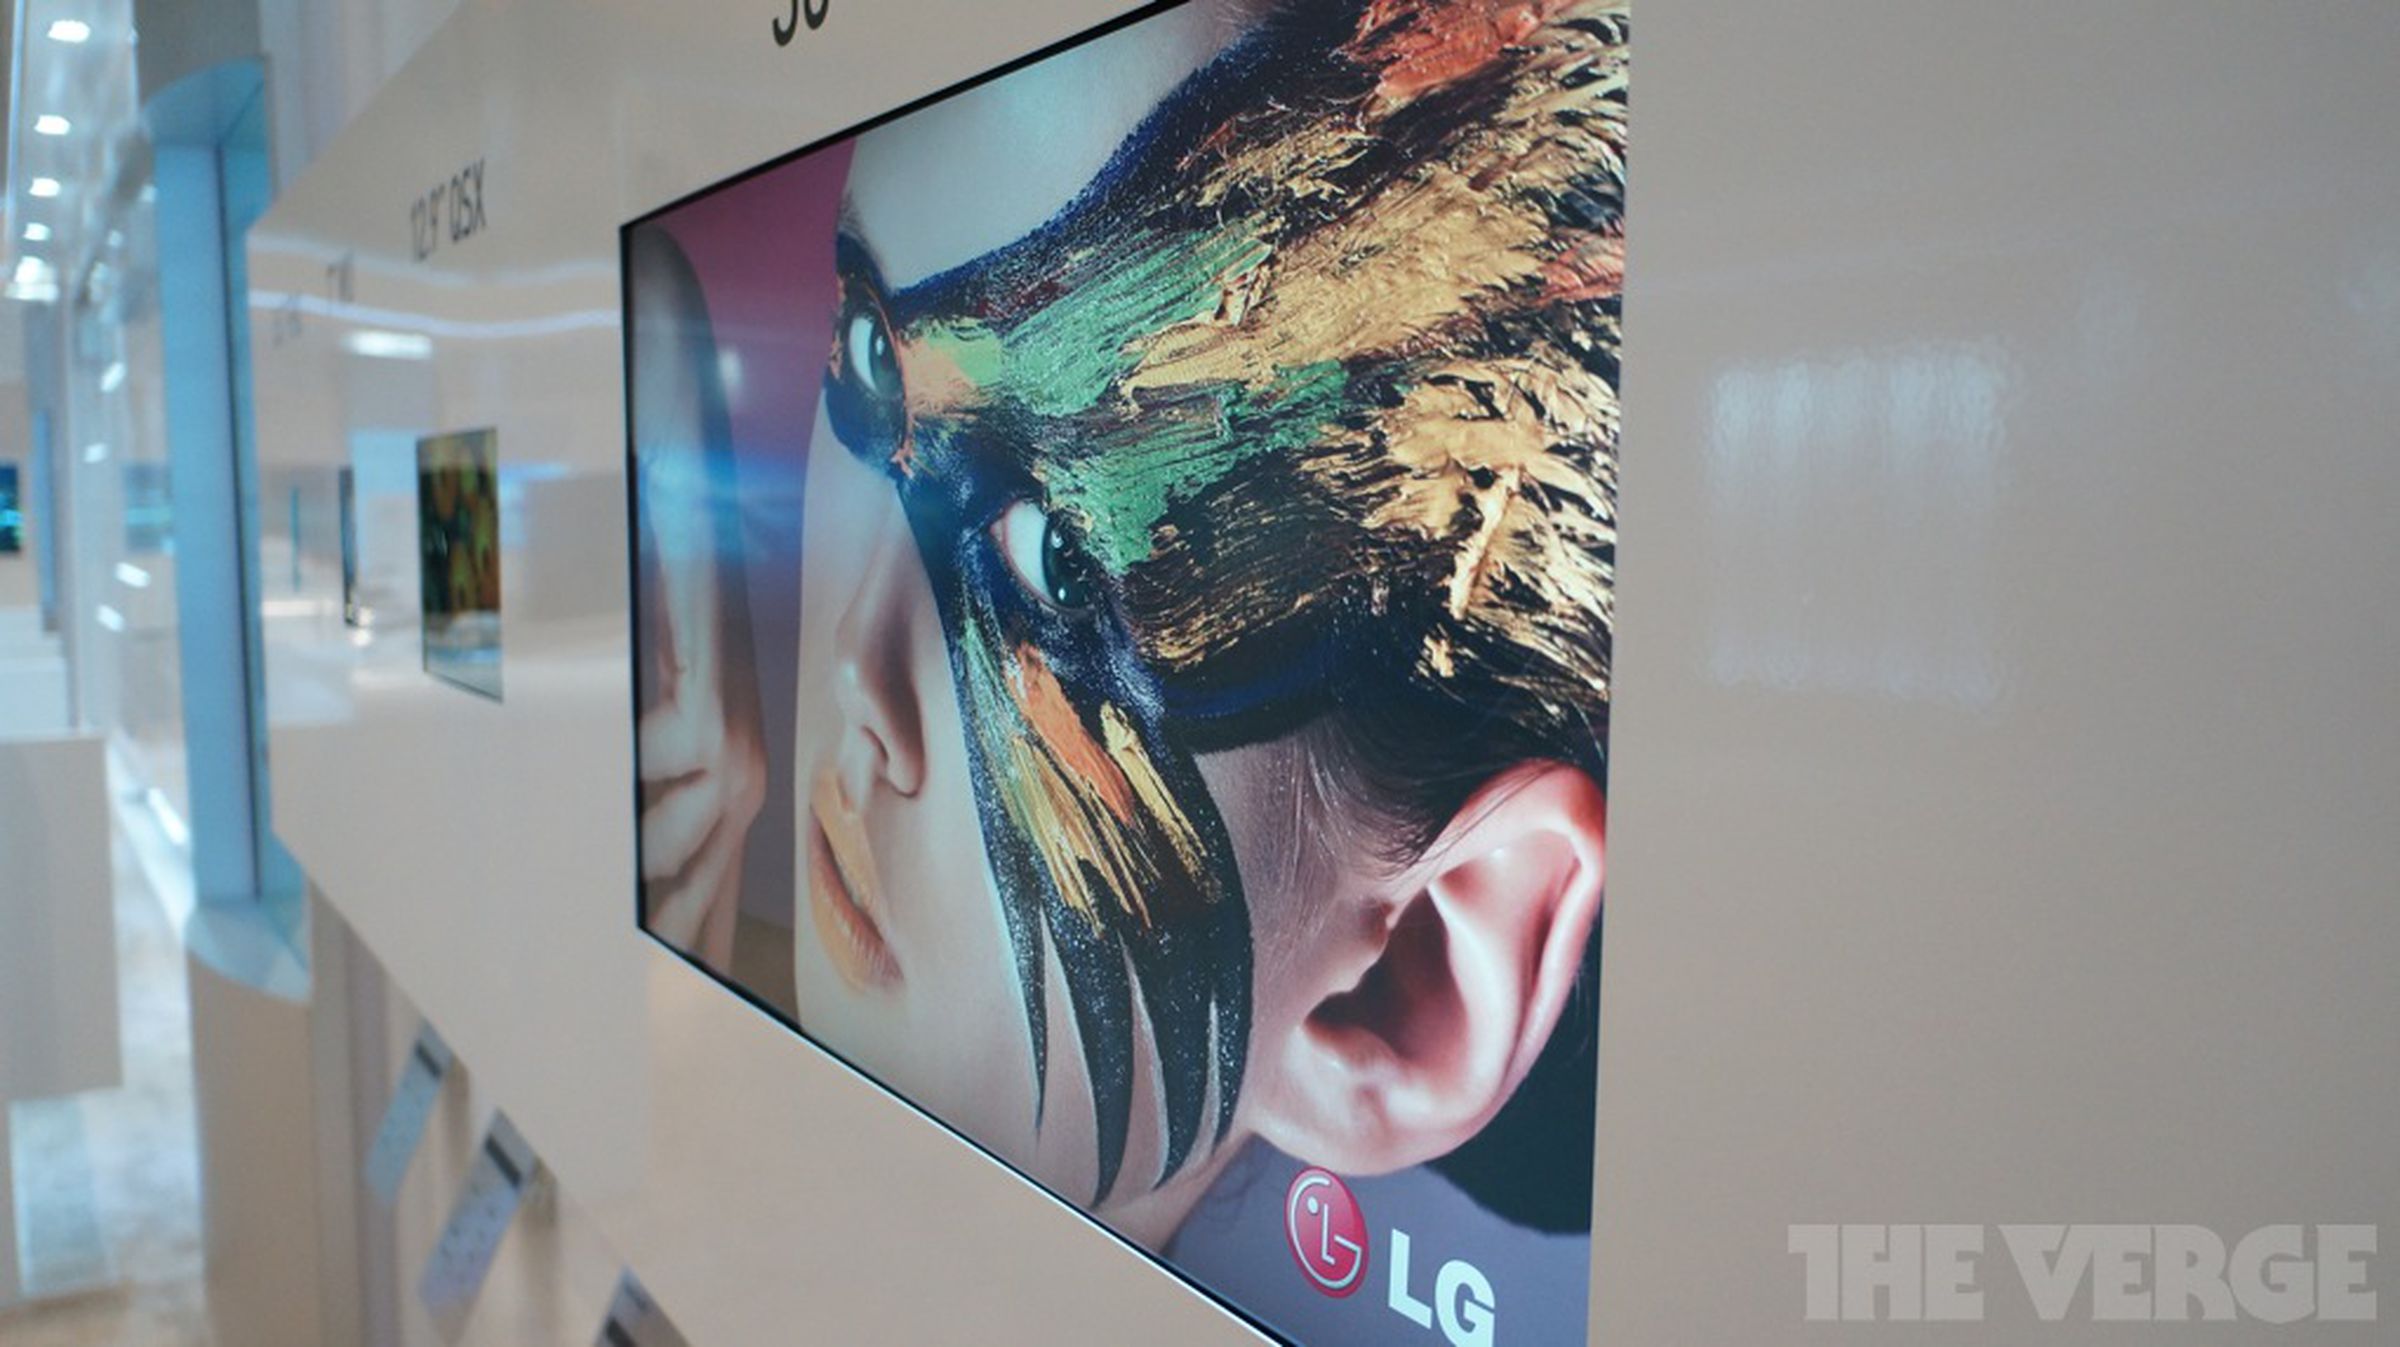 LG Display's 30-inch 4K monitor at CES 2013